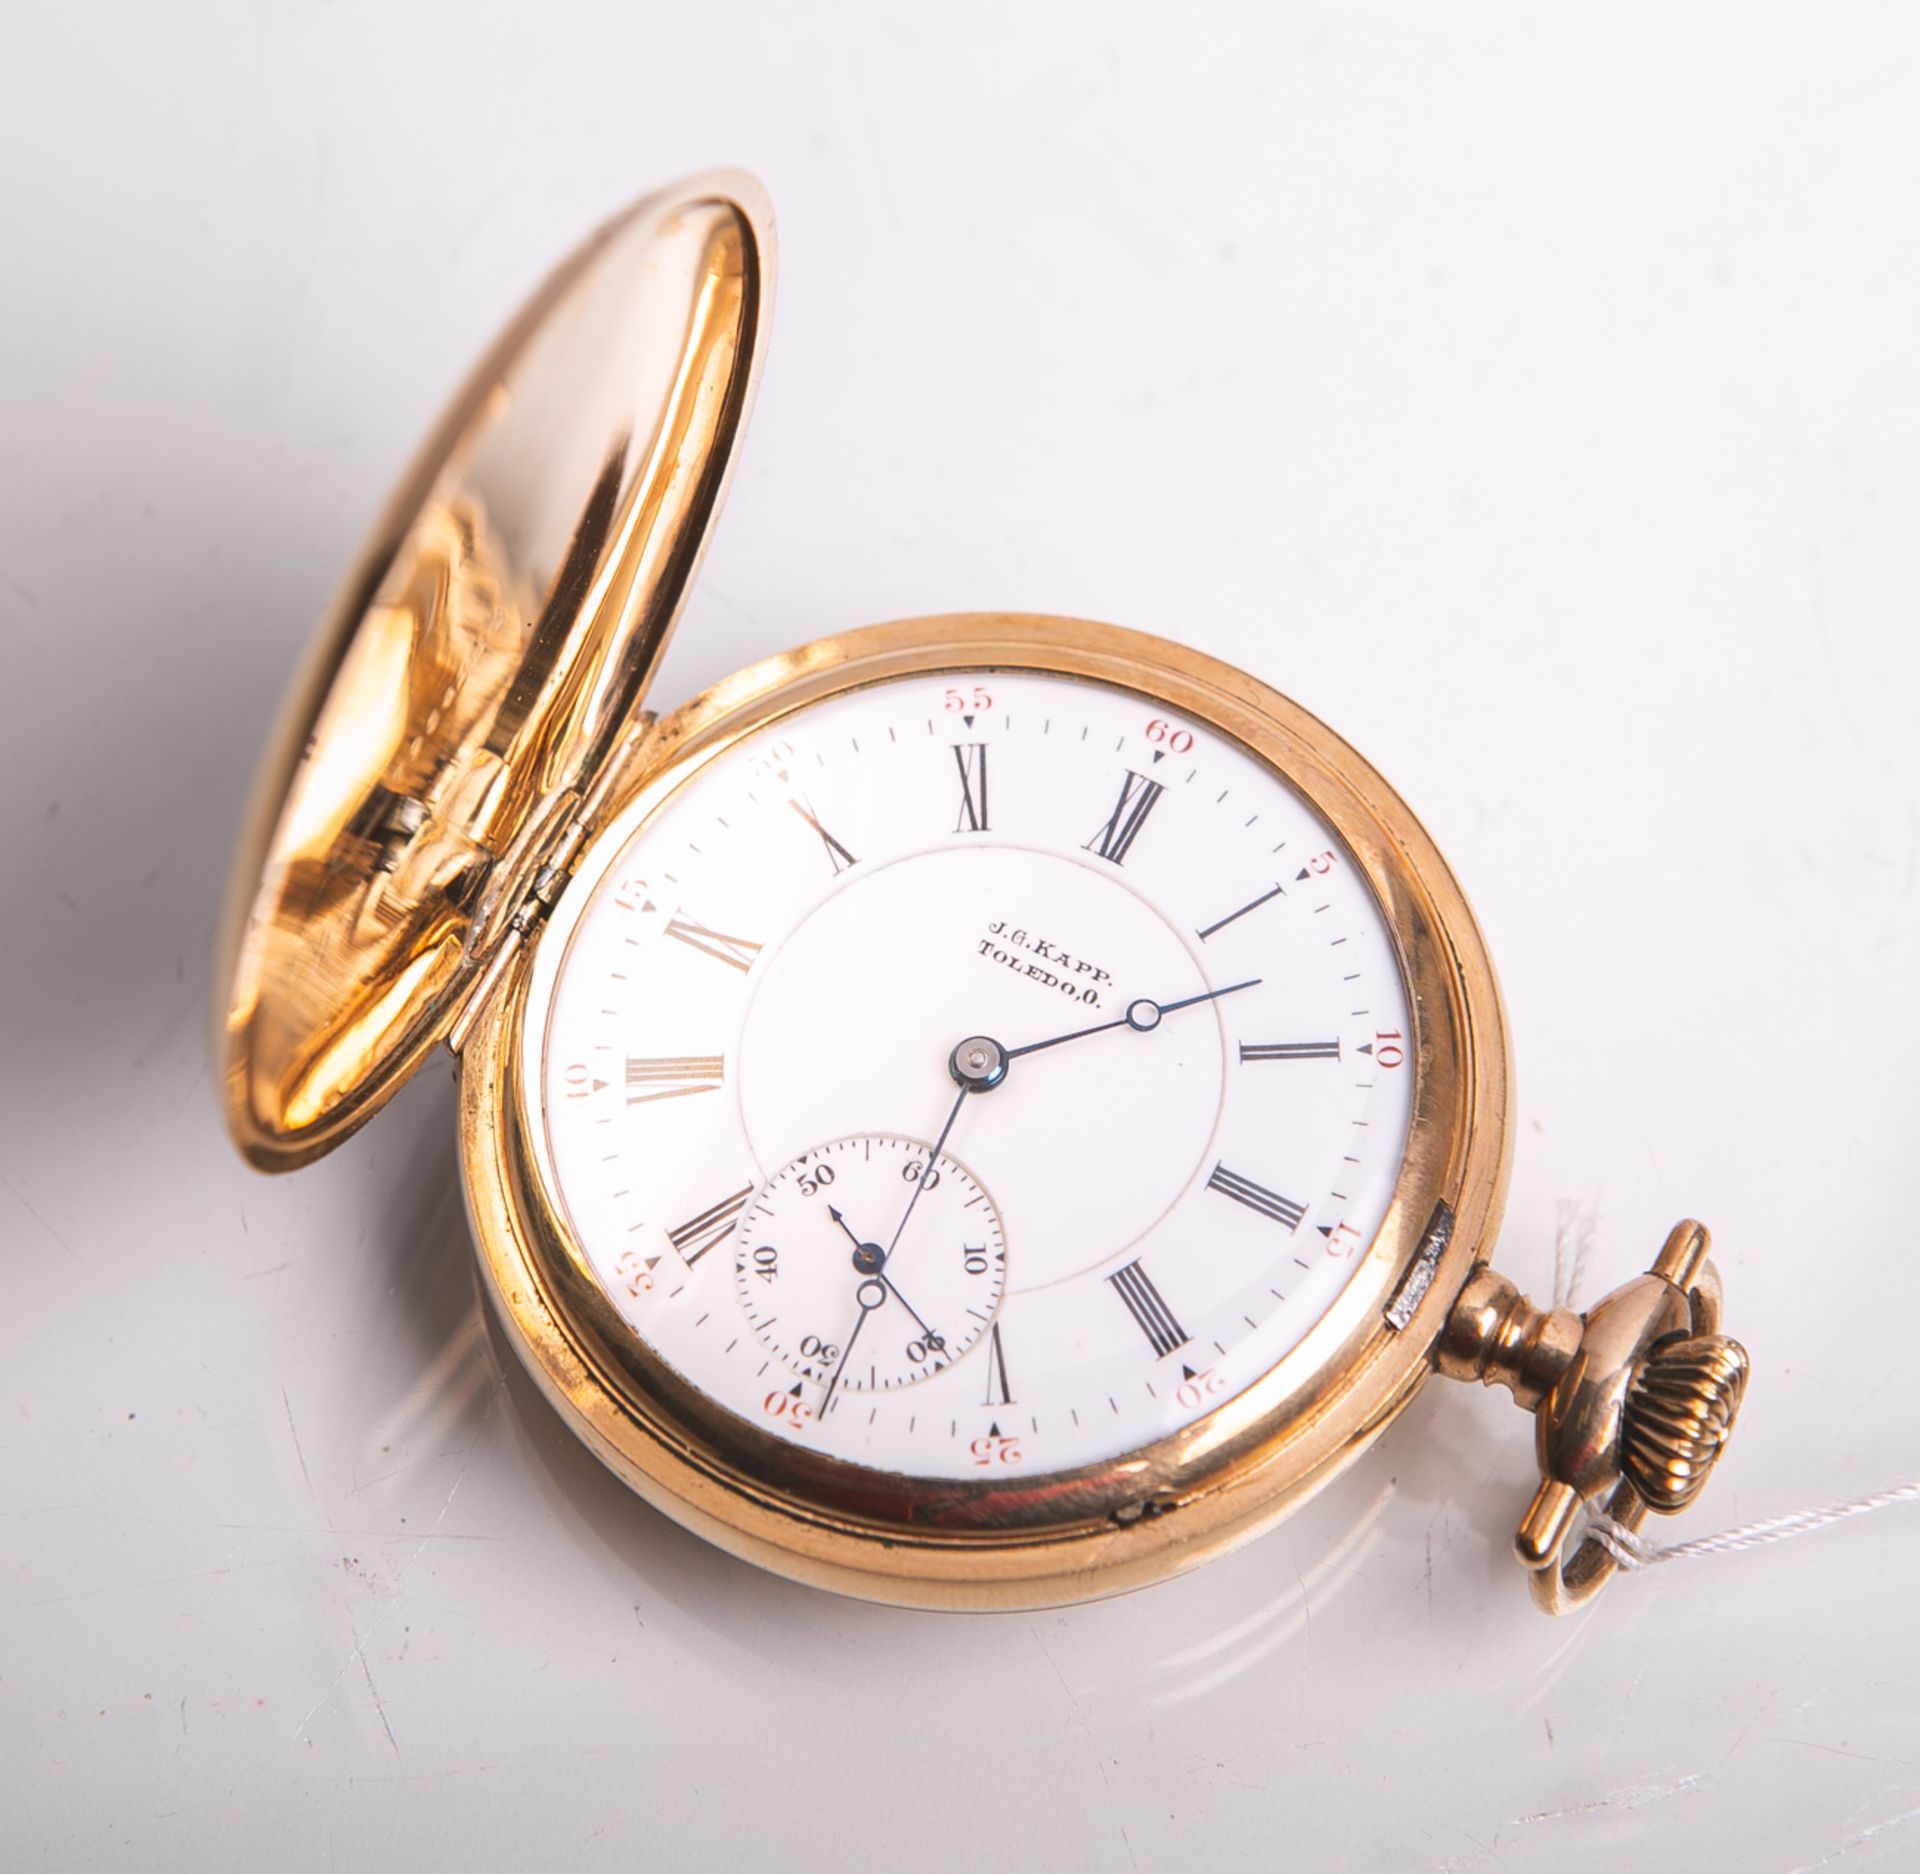 Herrentaschenuhr "J.G. Kapp.Toledo, 0" wohl "Gold Filled" (Keystone Watch u. Co., USA), - Image 3 of 3